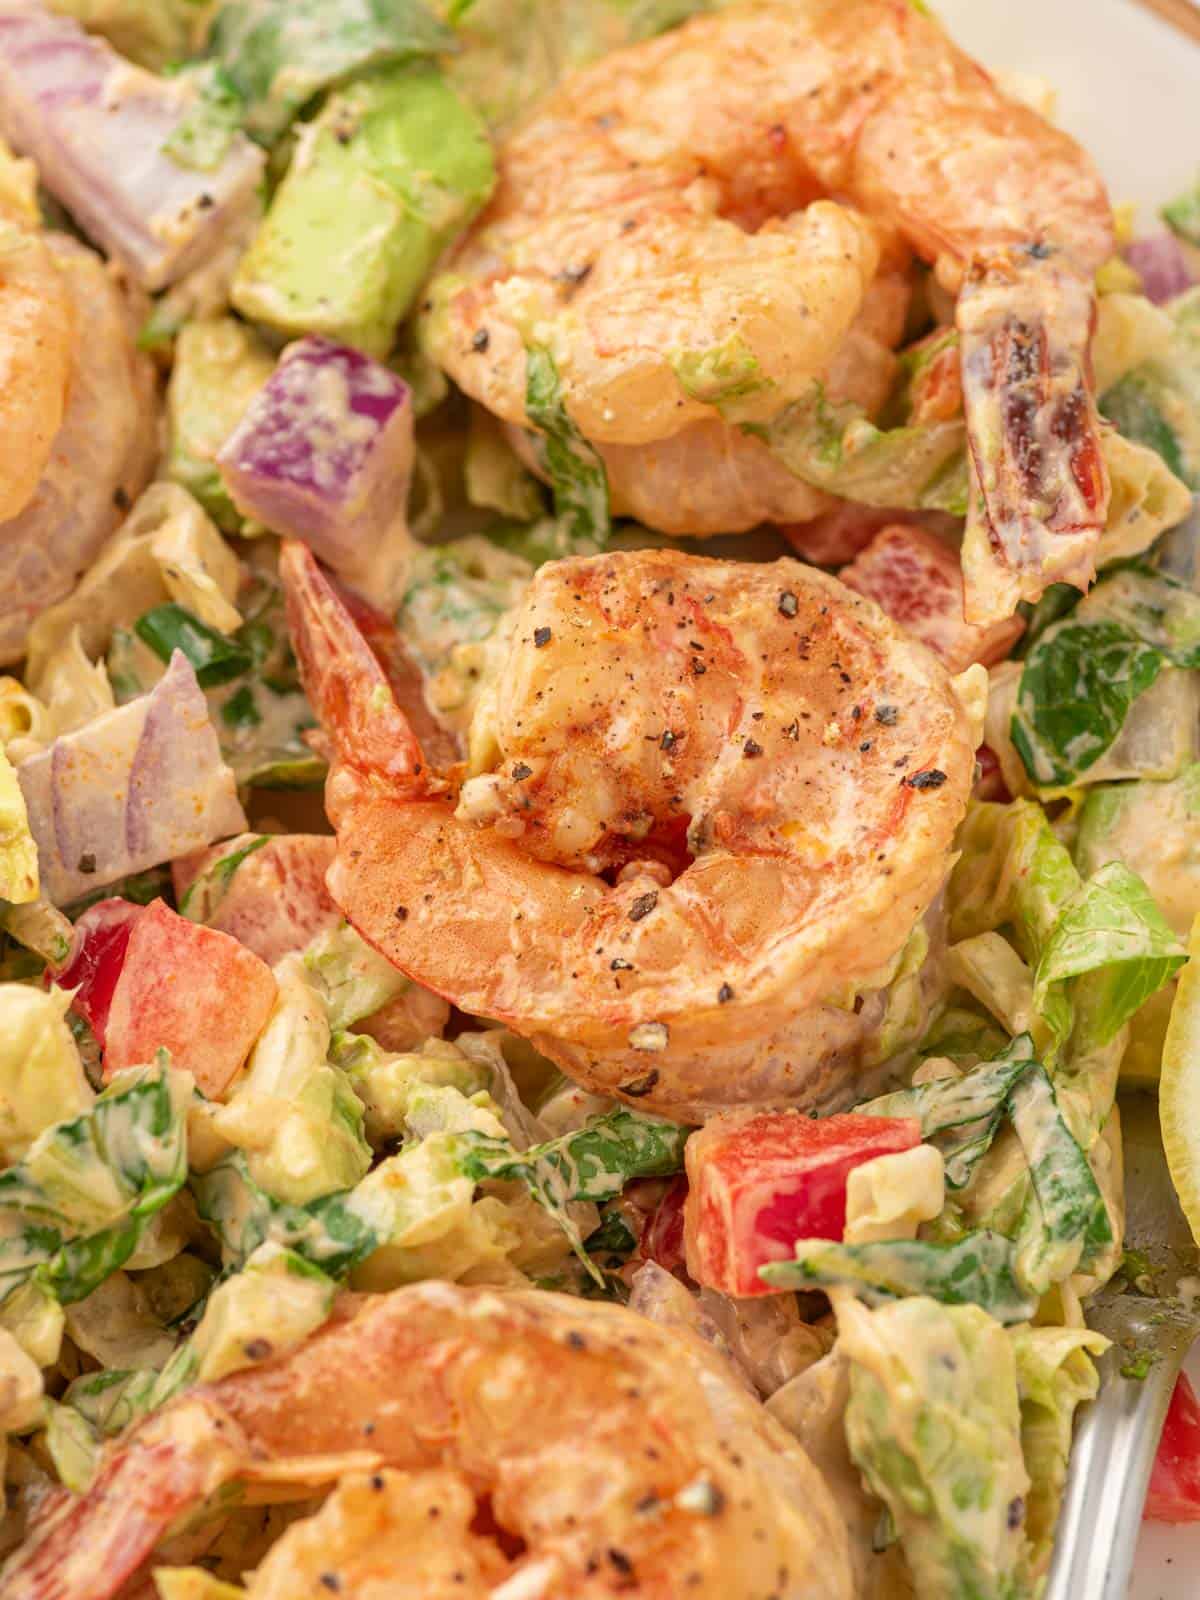 Closeup of shrimp salad with lettuce and avocado.